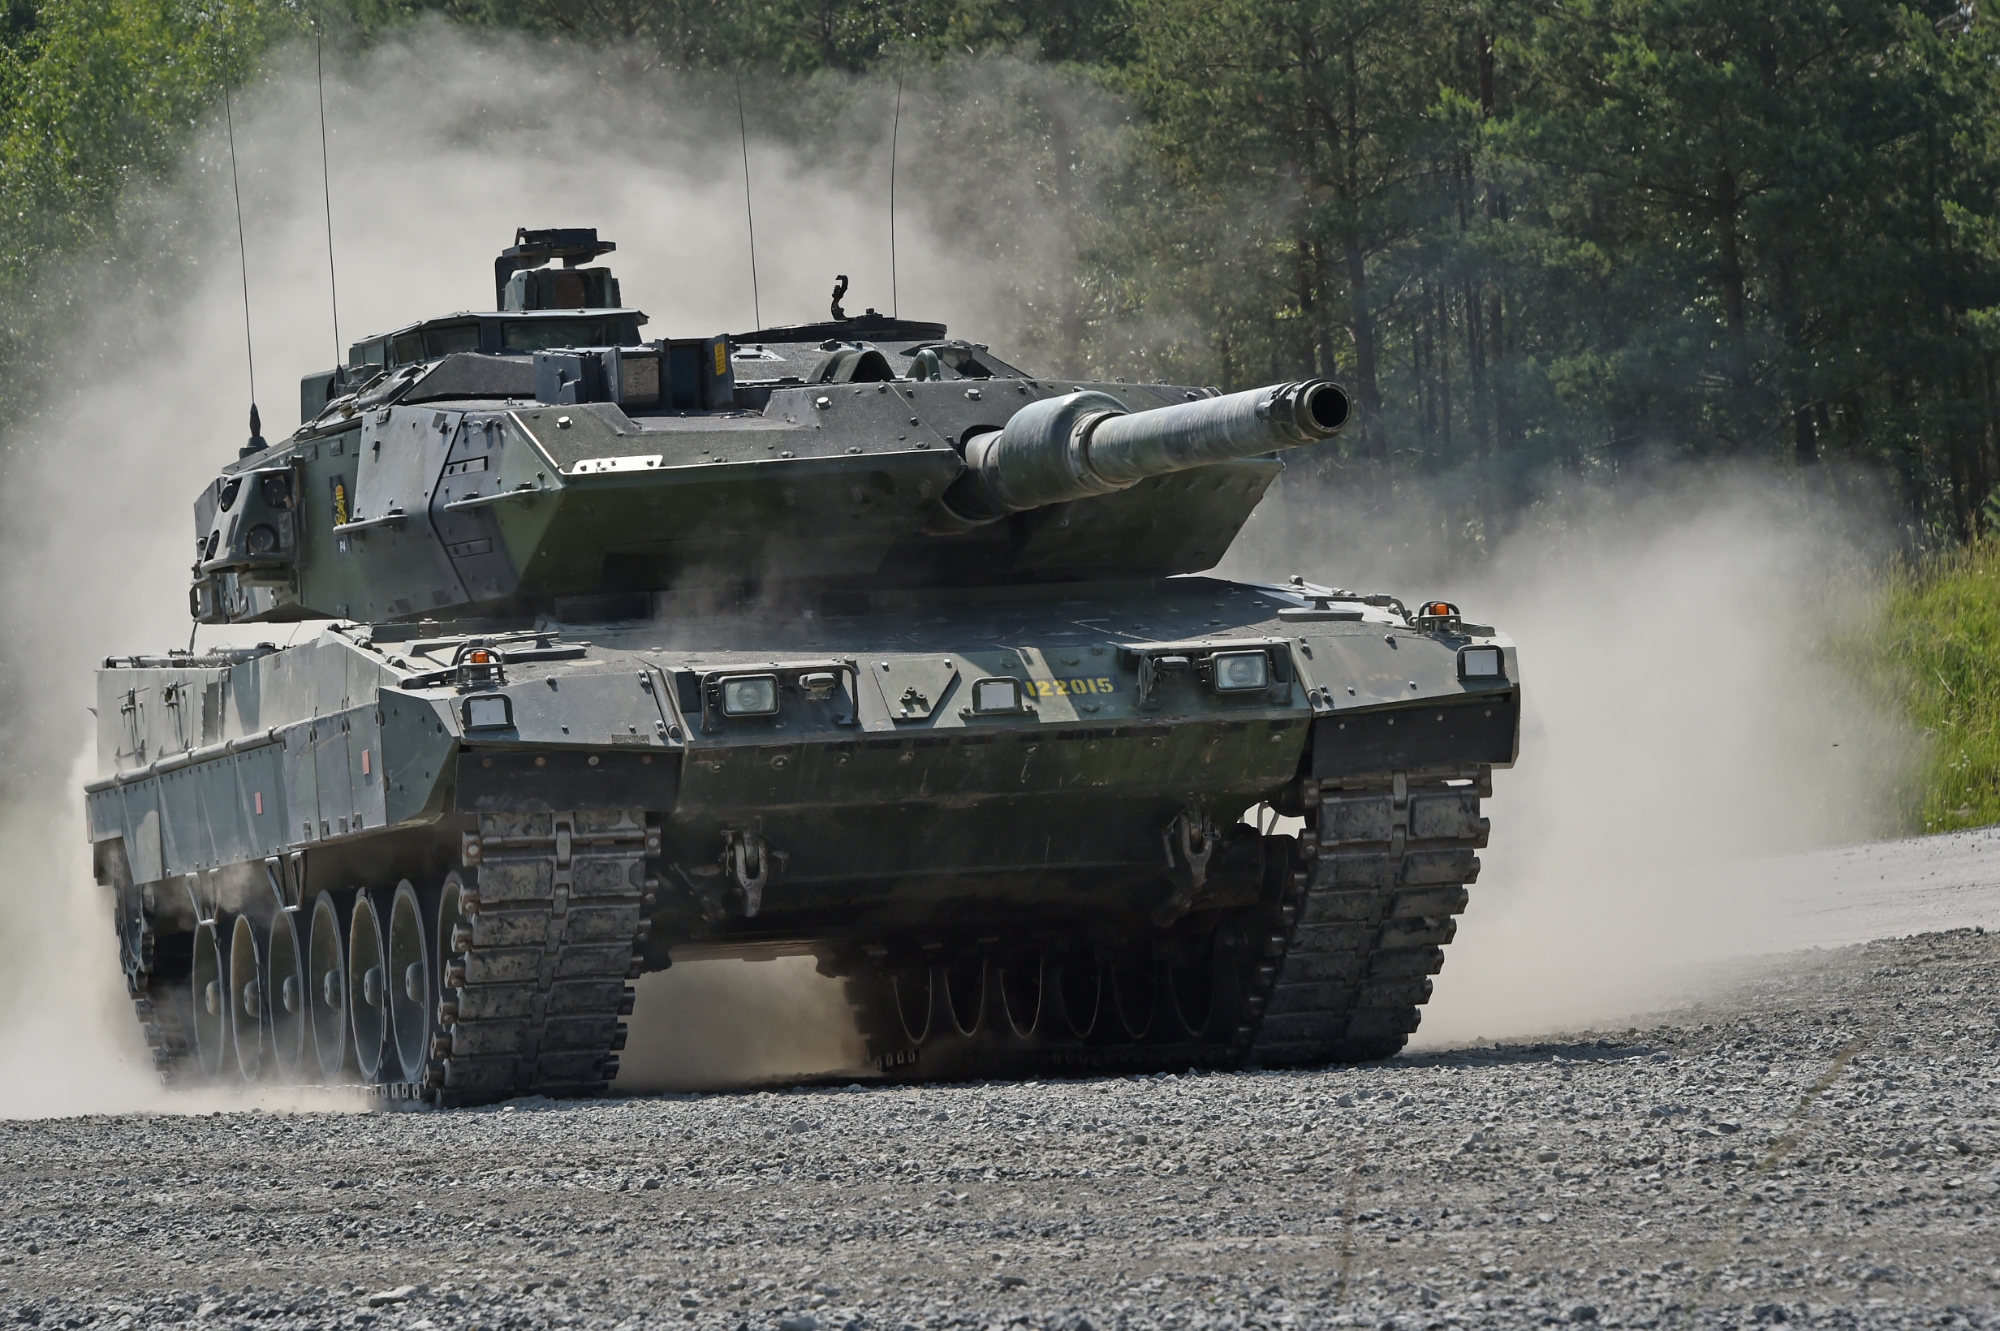 Der Spiegel: Sweden will give Ukraine 10 Stridsvagn 122 tanks, an upgraded version of the Leopard 2A5